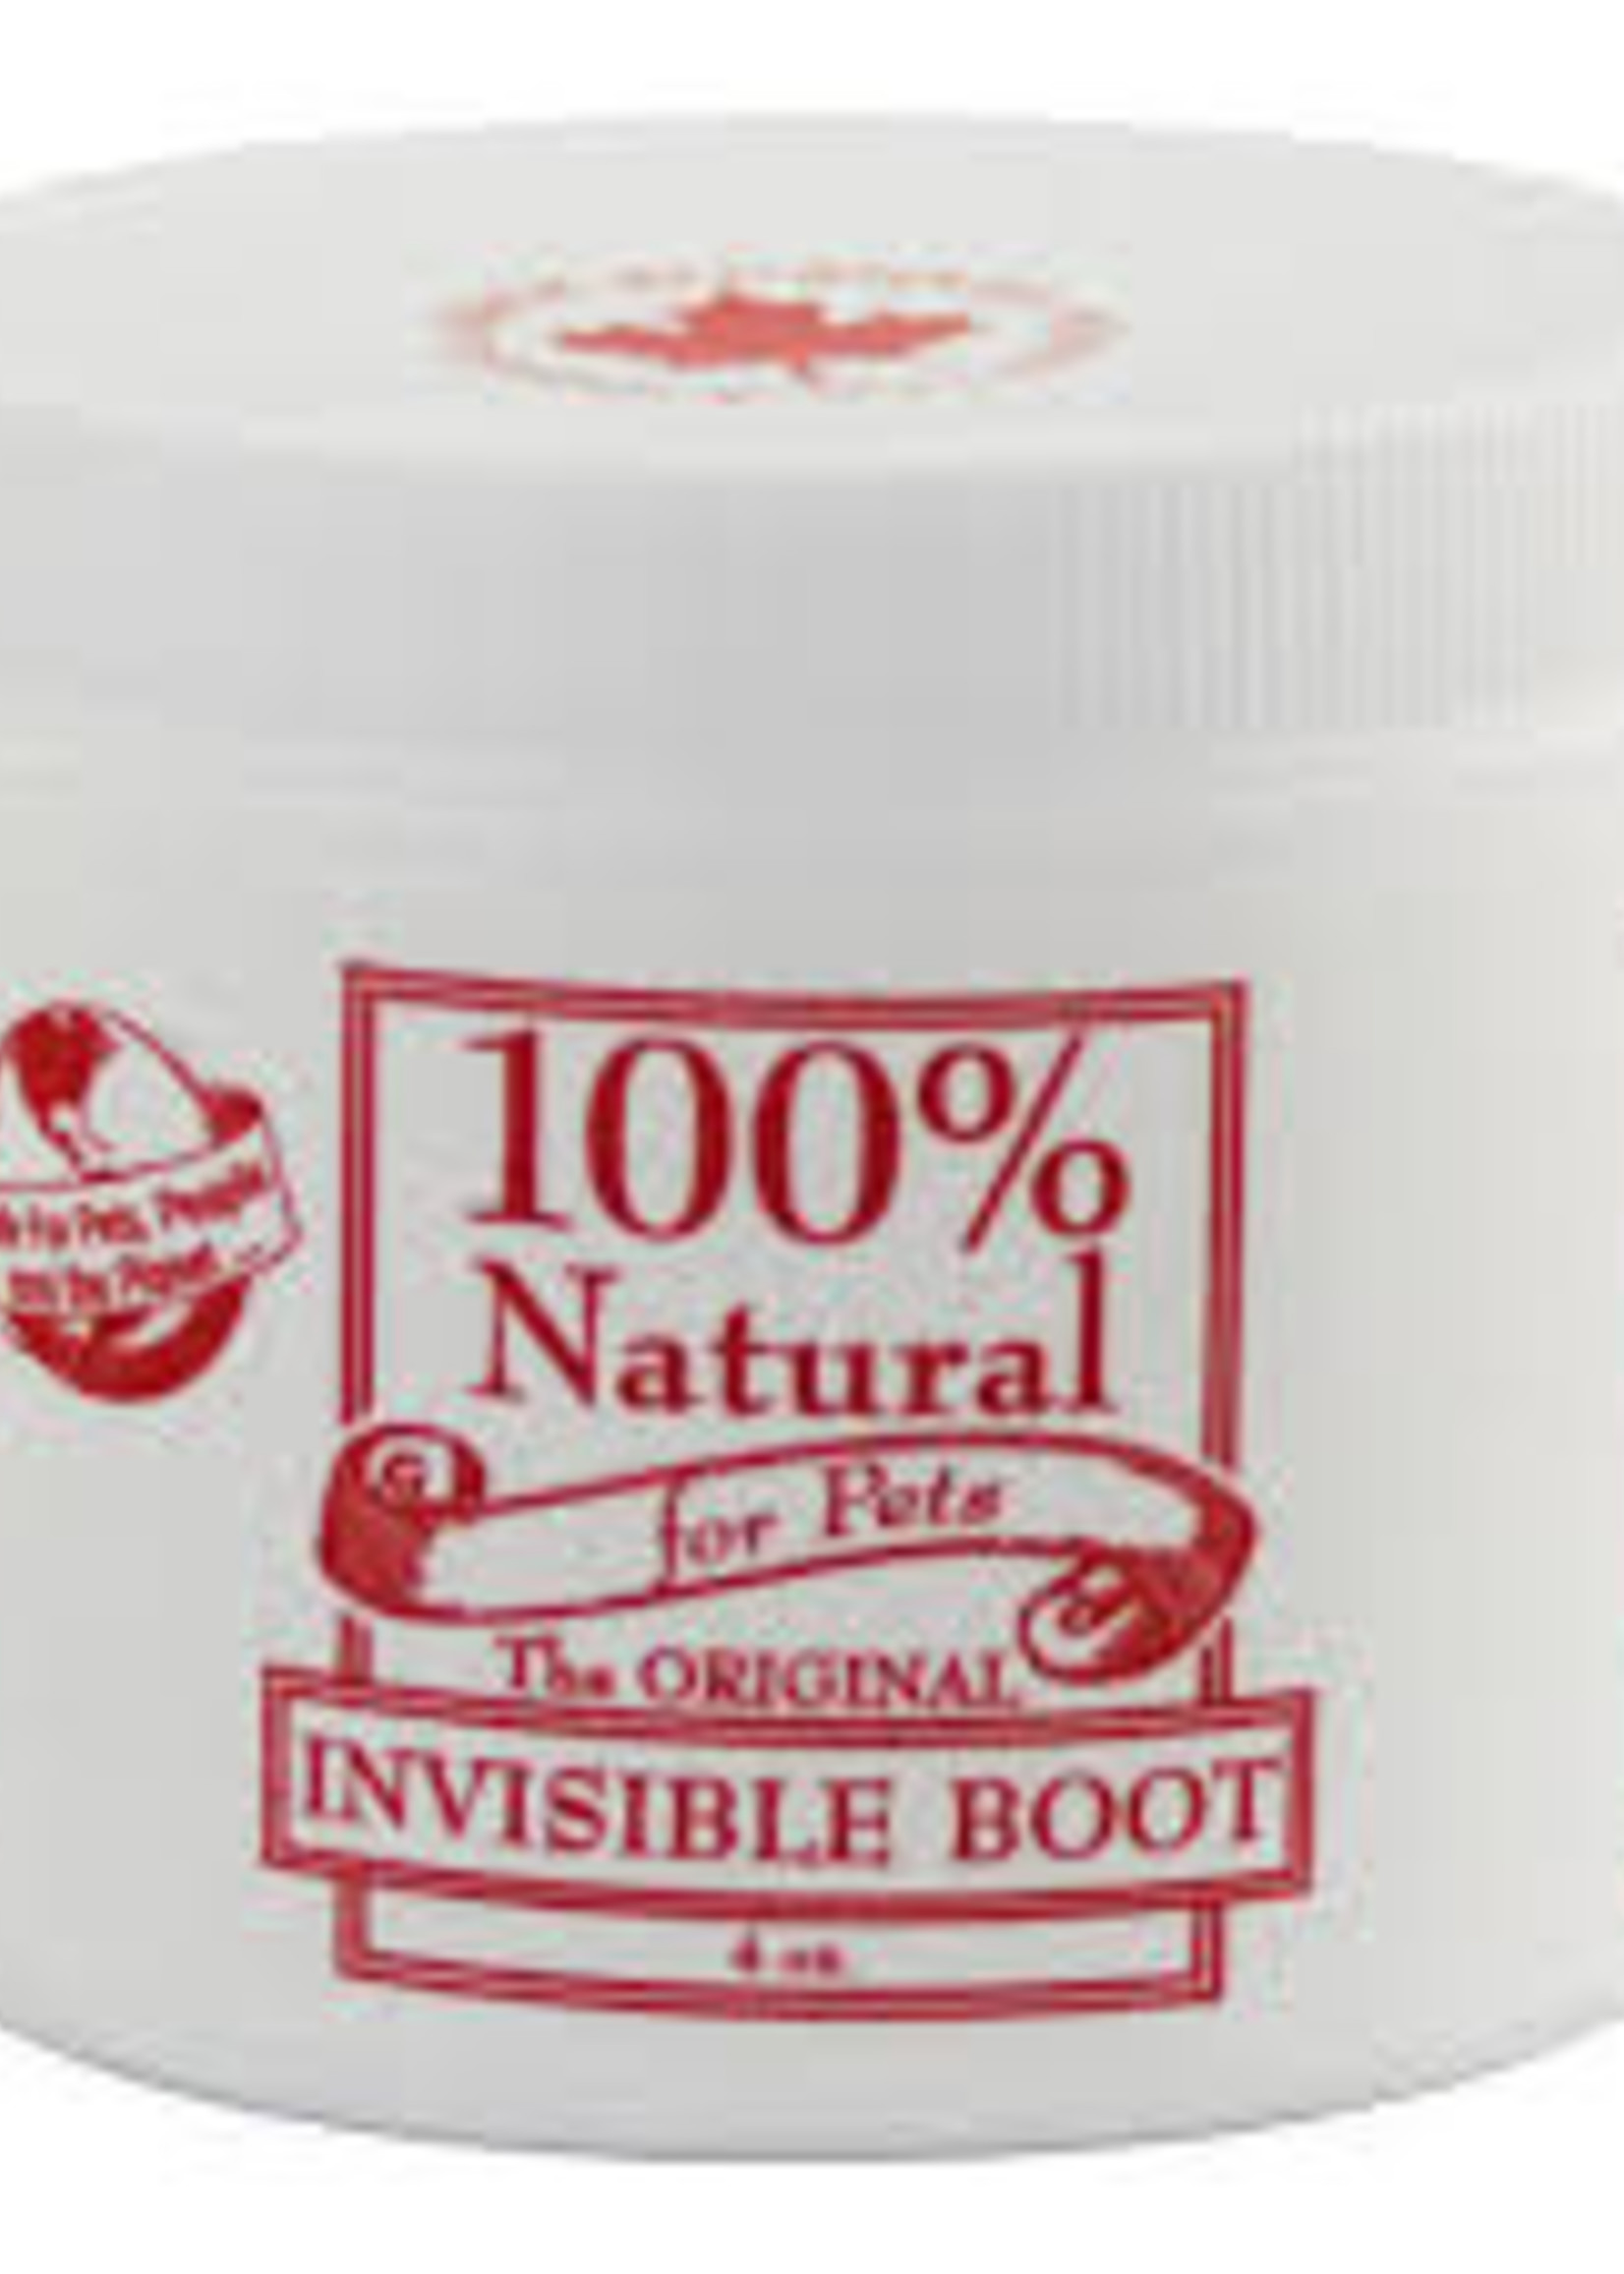 100% Natural for Pets 100% Natural Invisible Boot